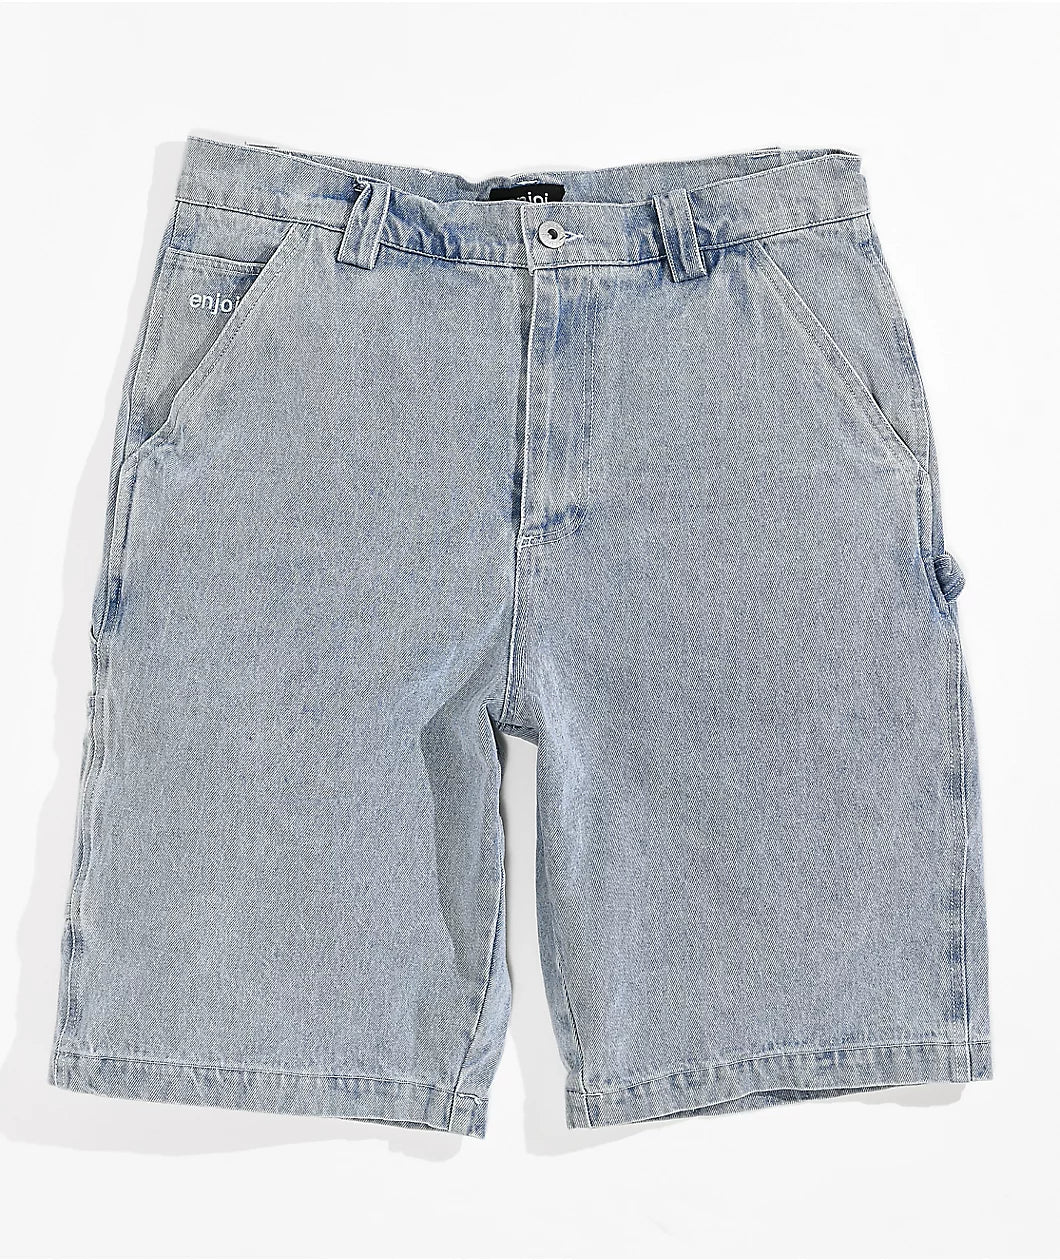 SALE - Enjoi 40oz Light Blue Denim Shorts